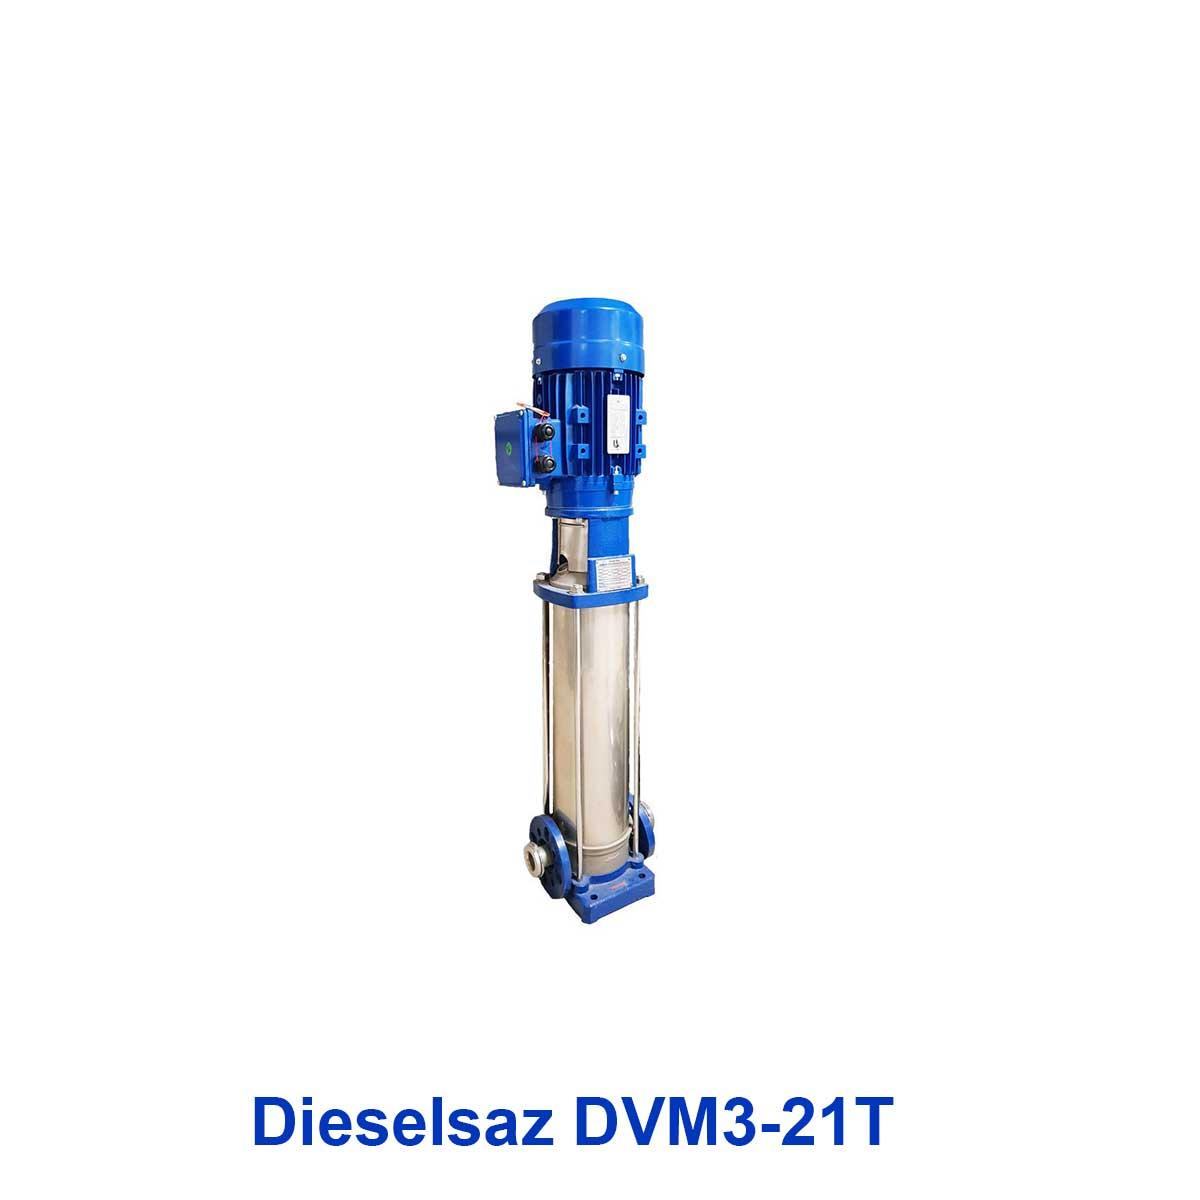 waterpump-vertical-Dieselsaz-DVM3-21T